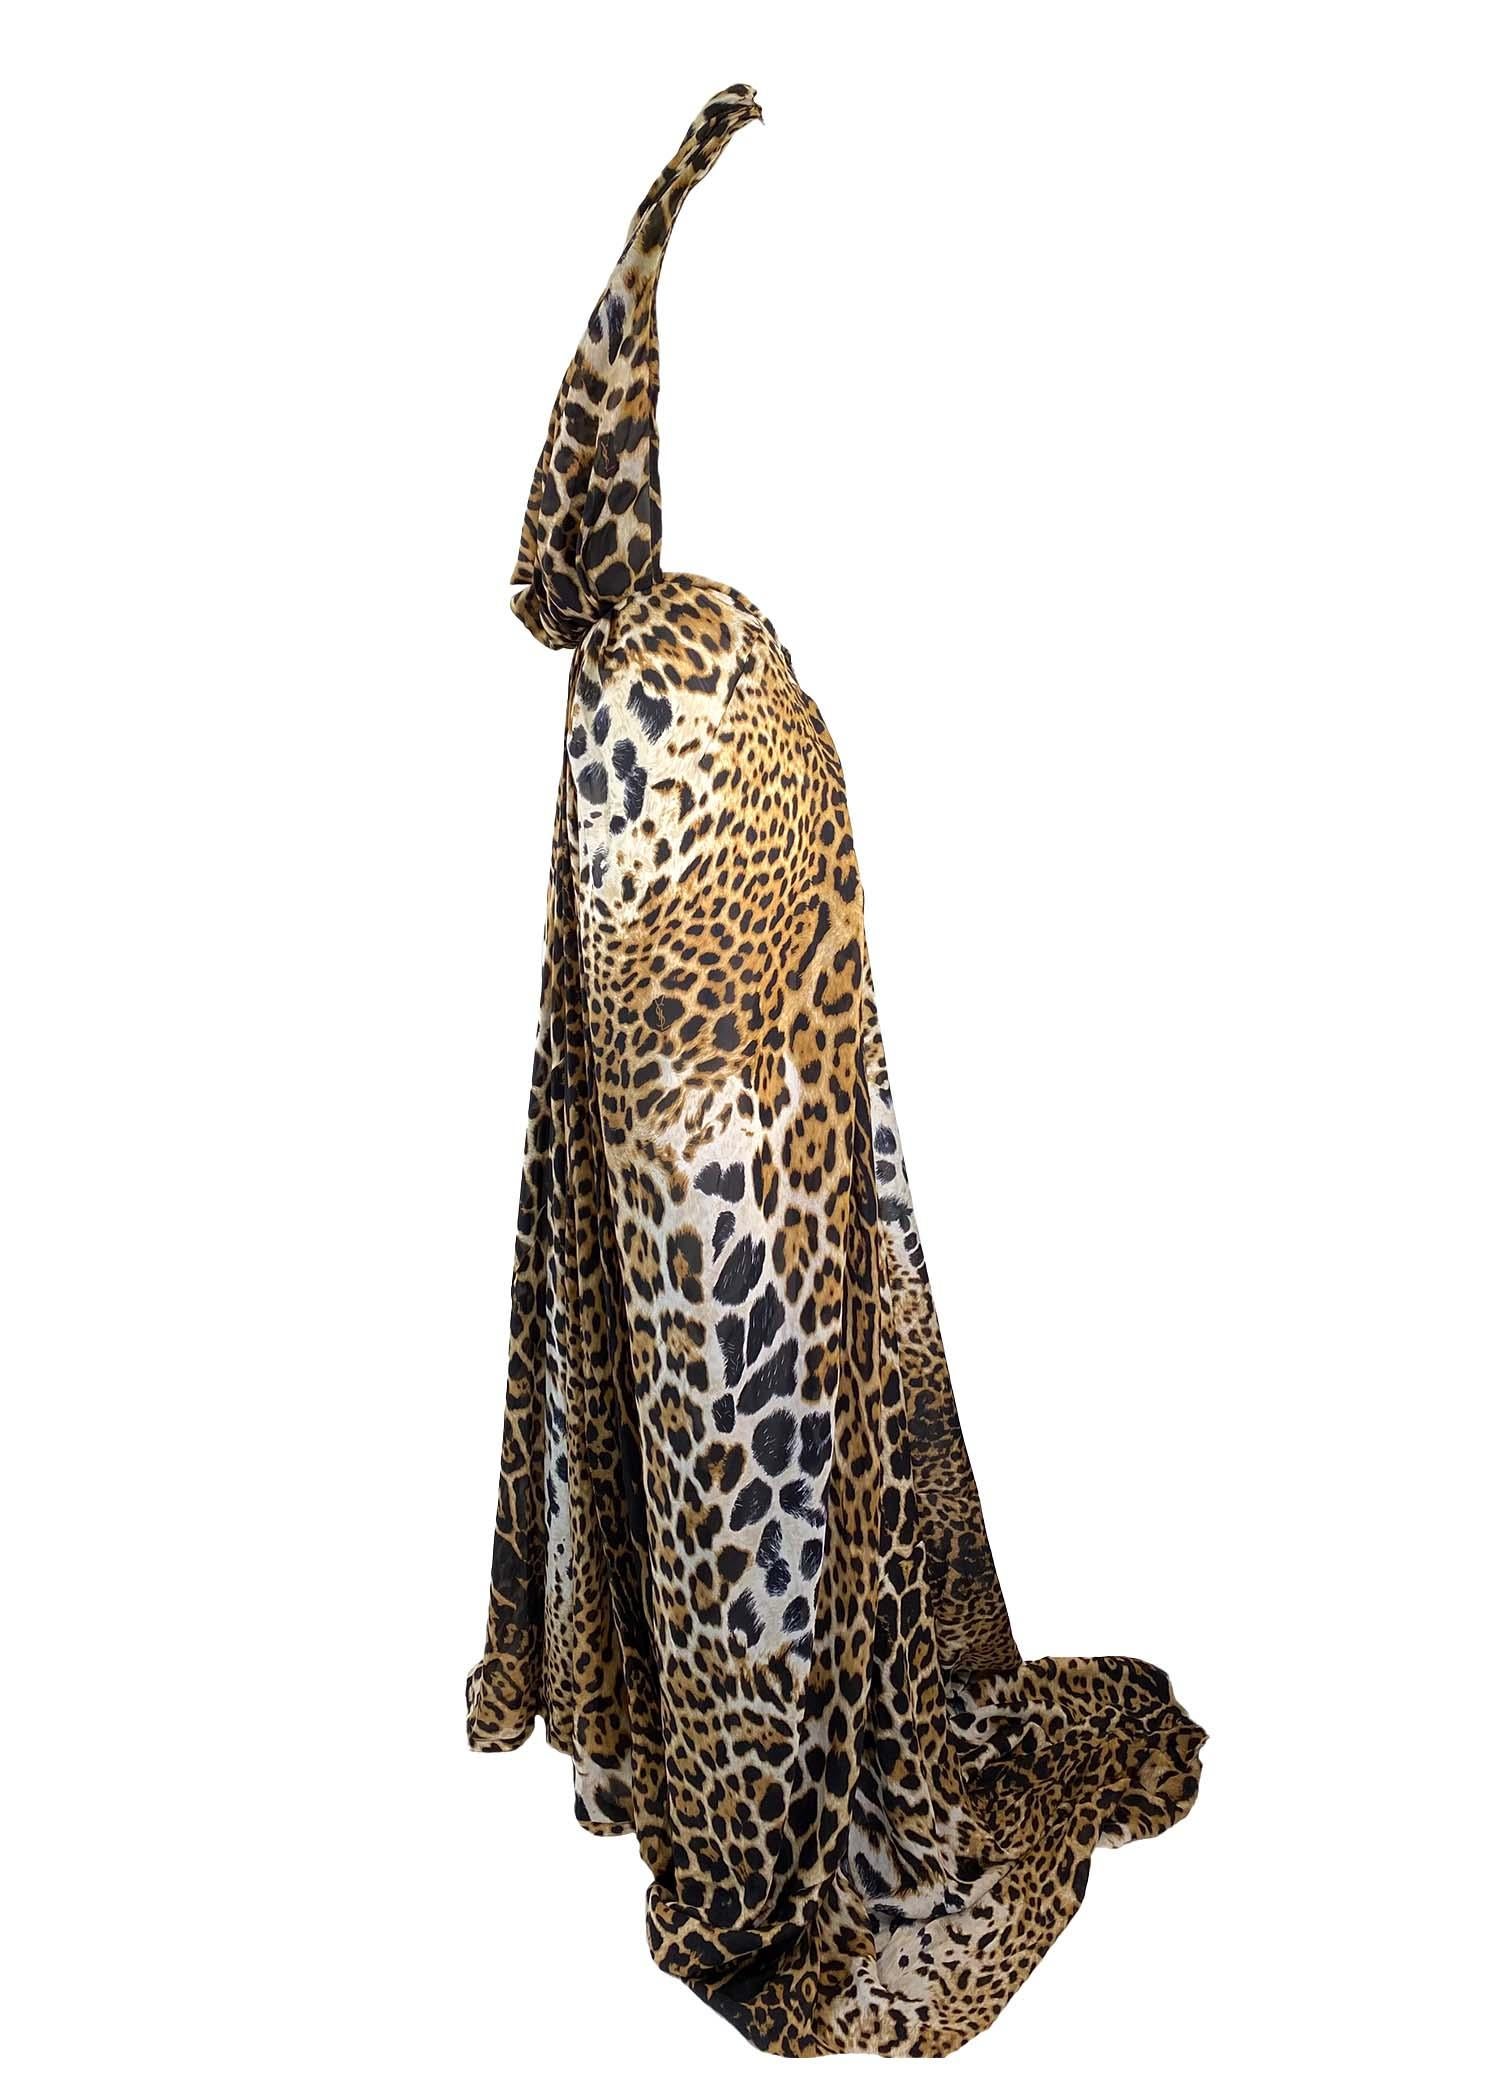 S/S 2002 Yves Saint Laurent by Tom Ford Silk Cheetah Print Gown Safari  For Sale 2